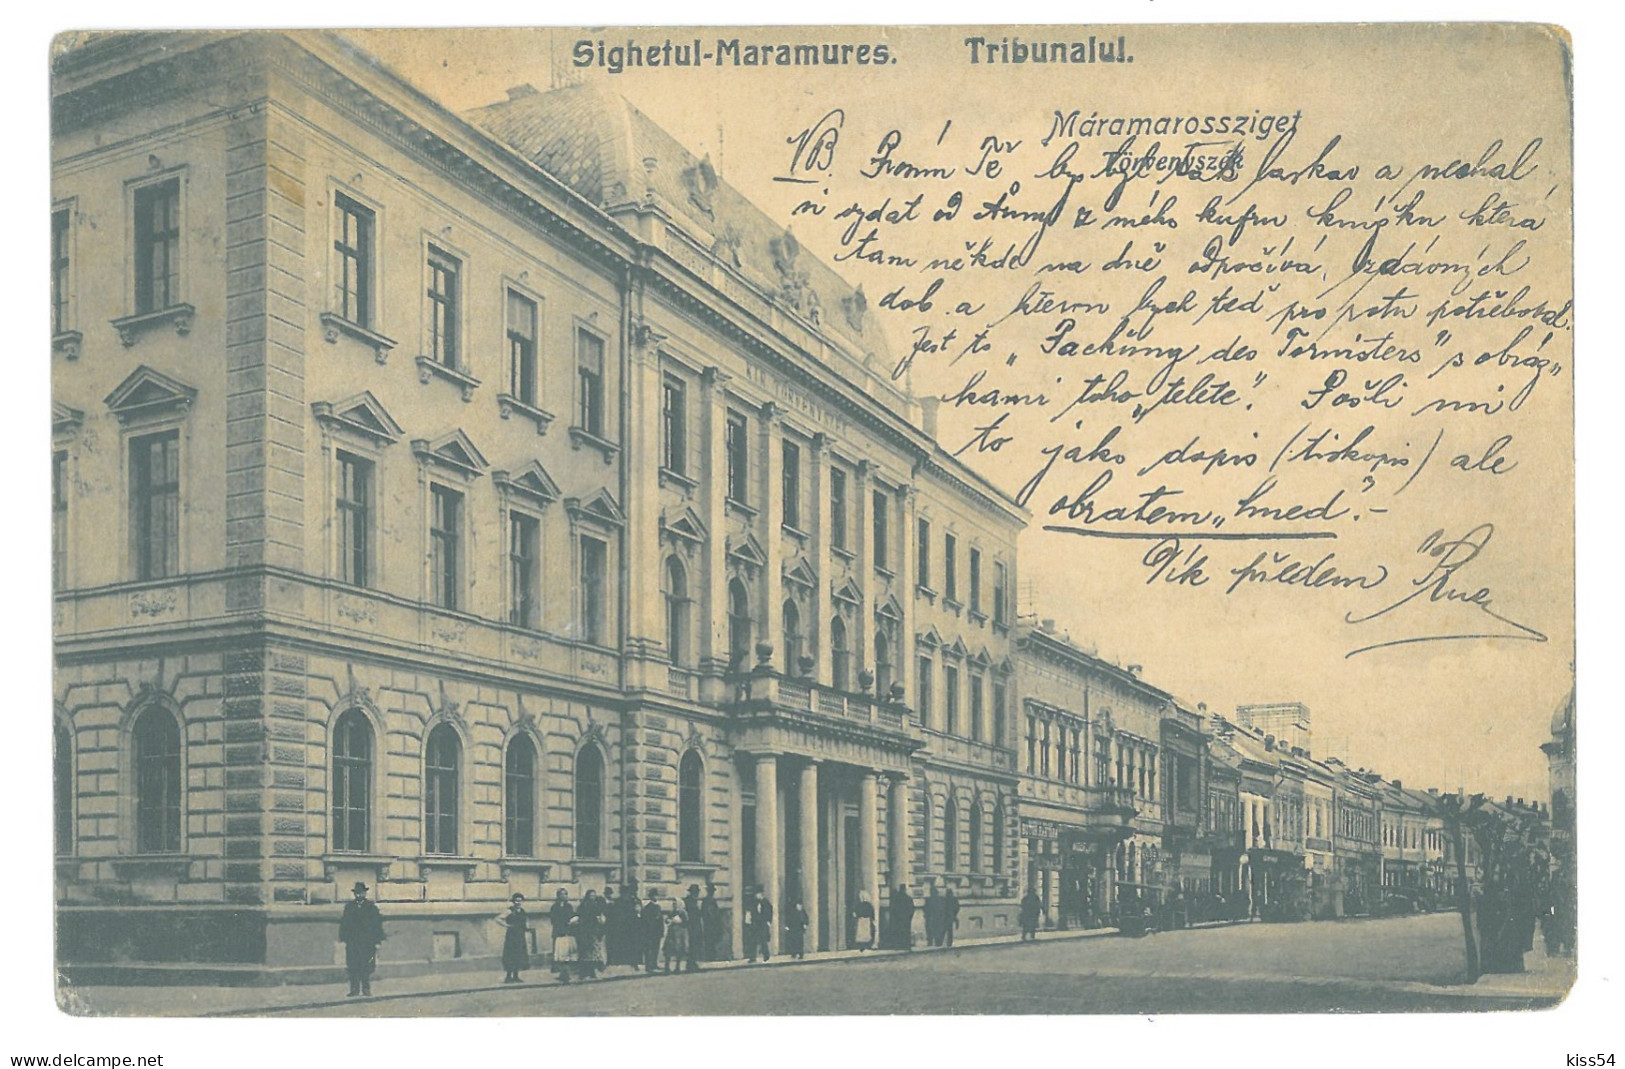 RO 79 - 18574 SIGHET, Maramures, Justice Palace, Romania - Old Postcard - Used - 1922 - Rumänien